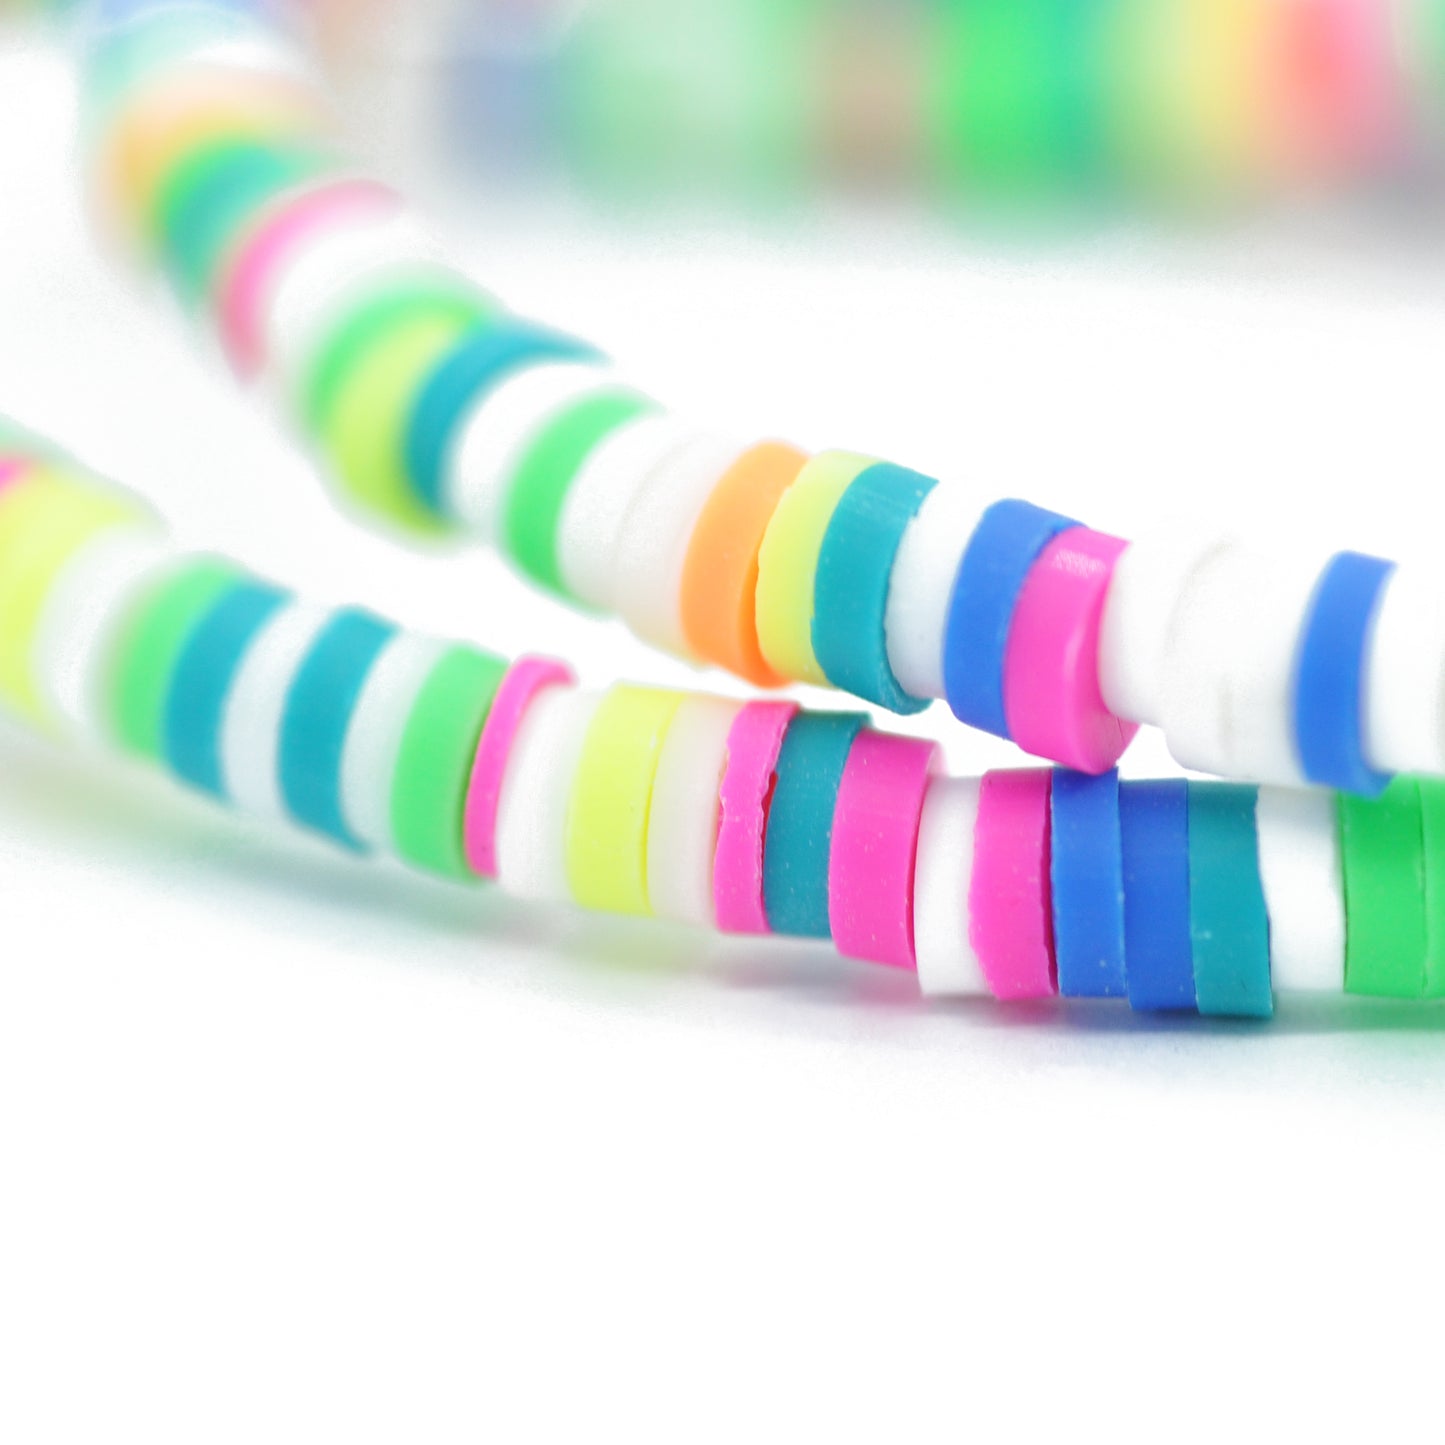 Katsuki disc beads / neon pastel green mix / Ø 4mm